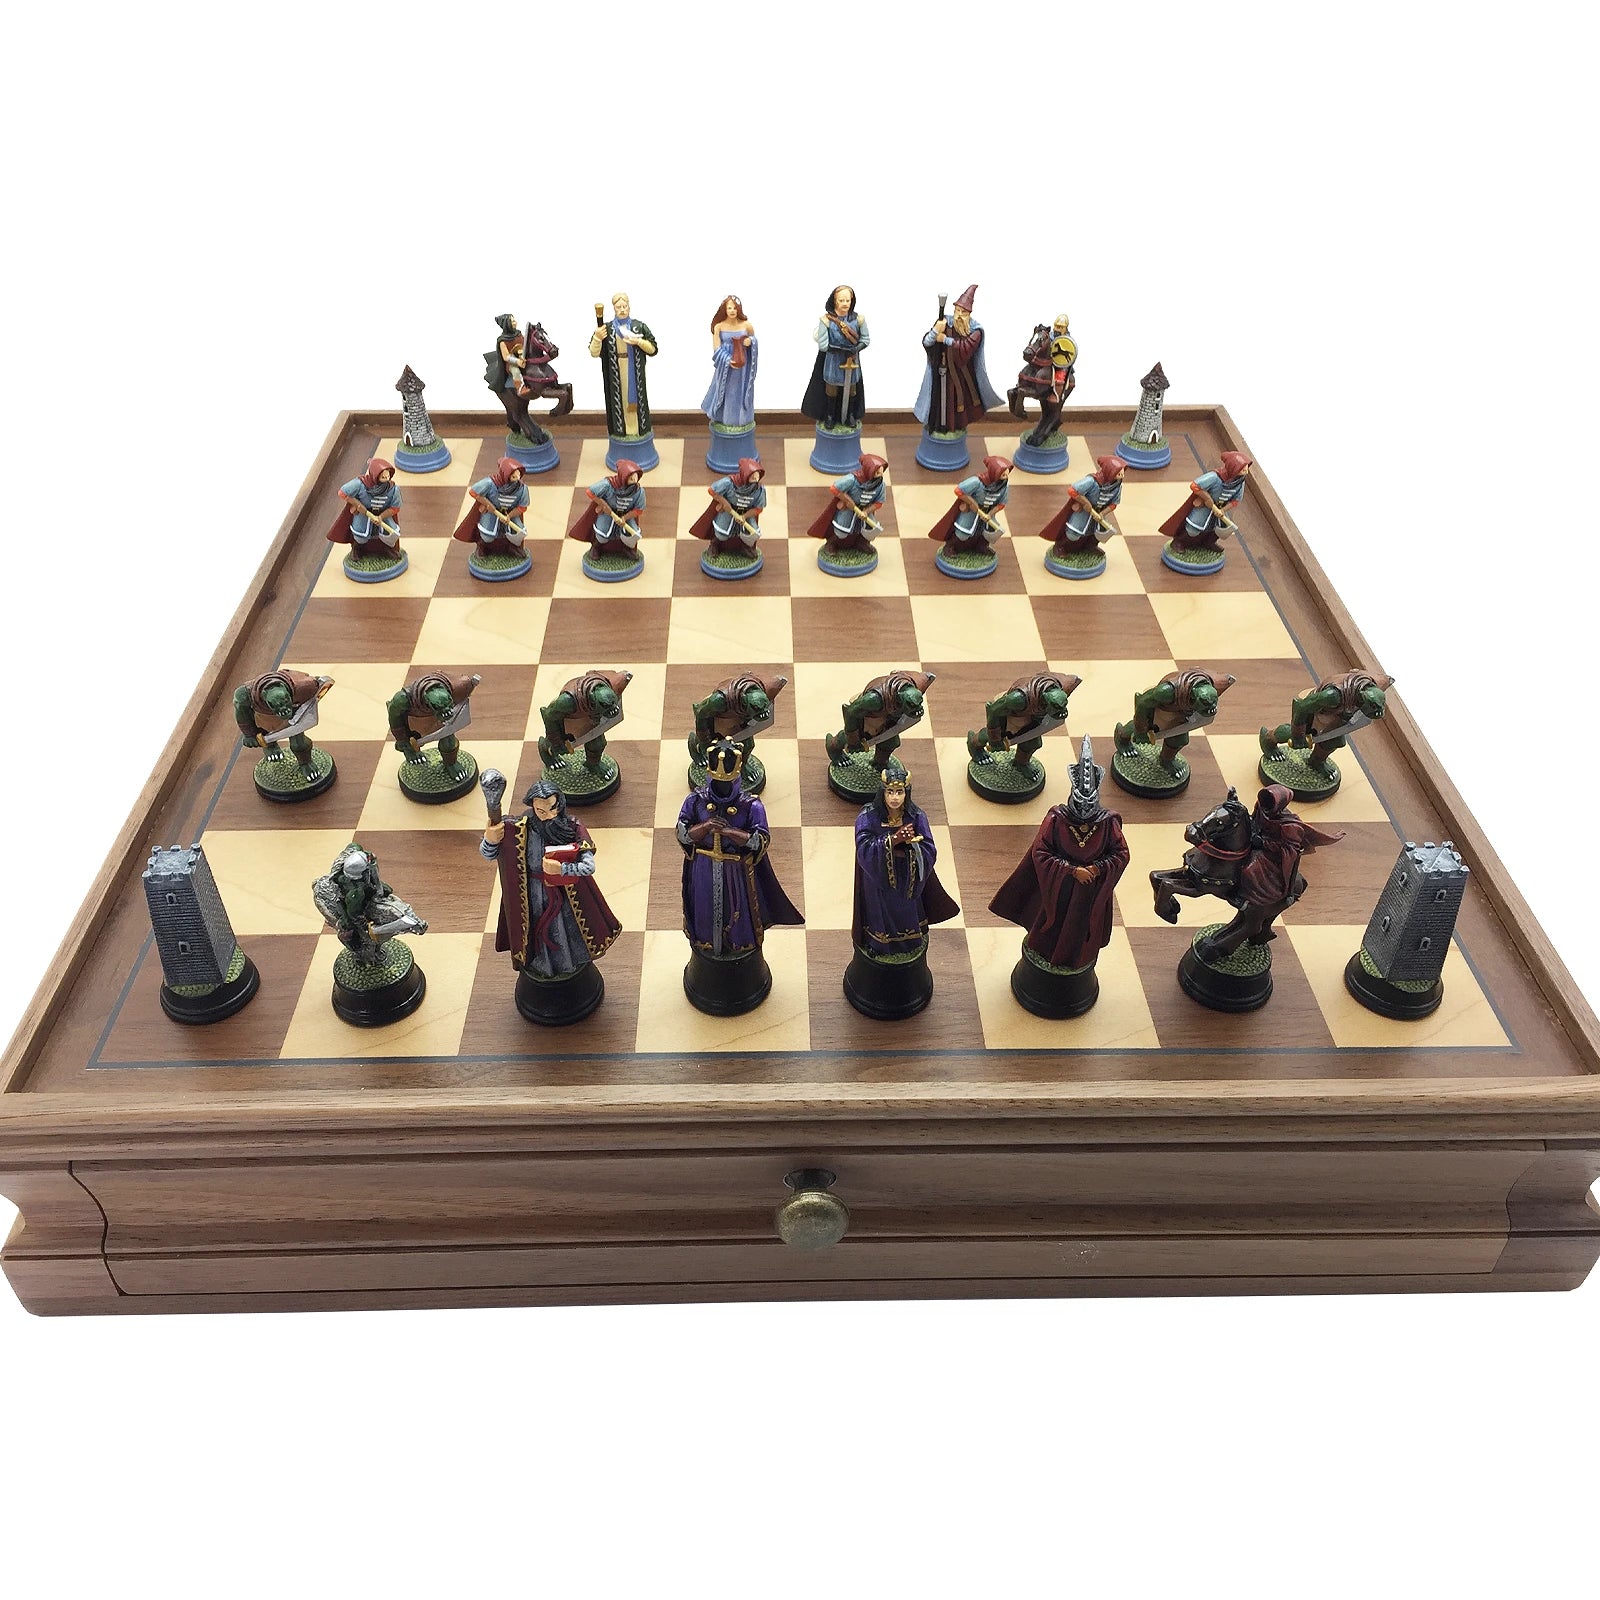 Toy soldier miniature army men Fantasy Chess Set.